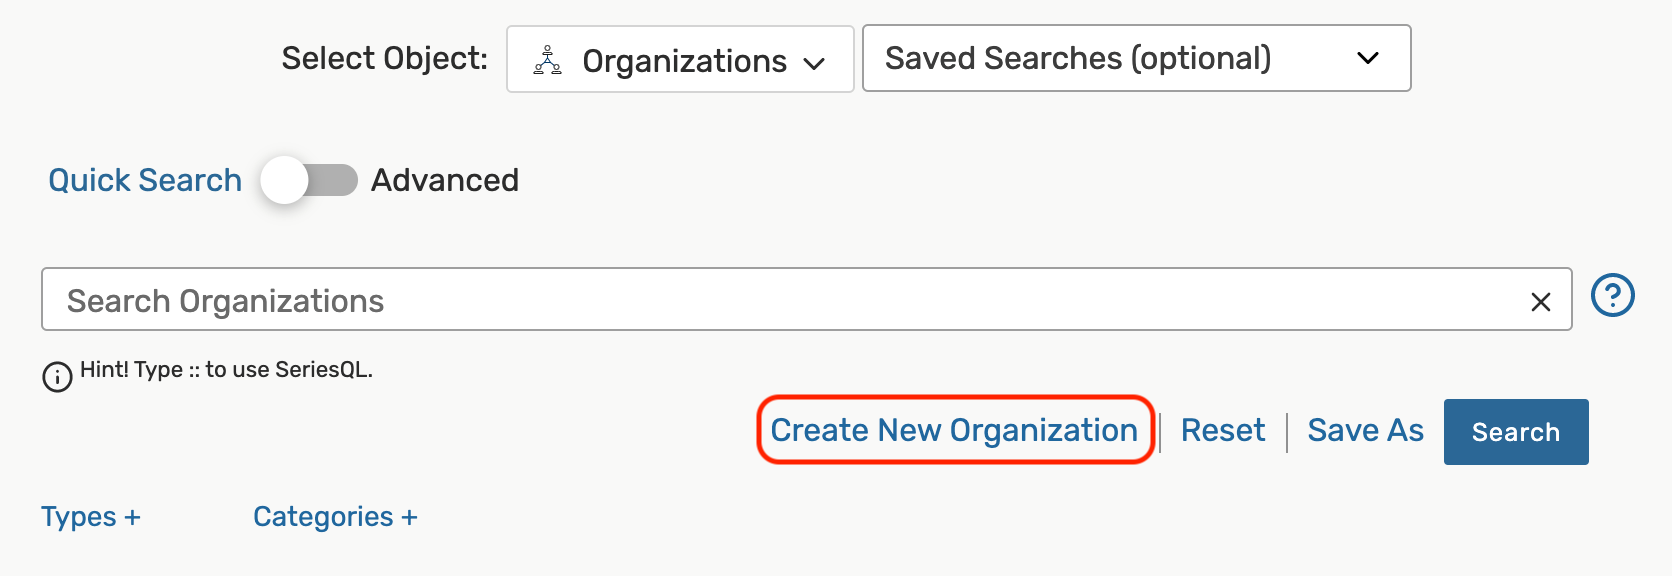 Create new organization button below the organization search